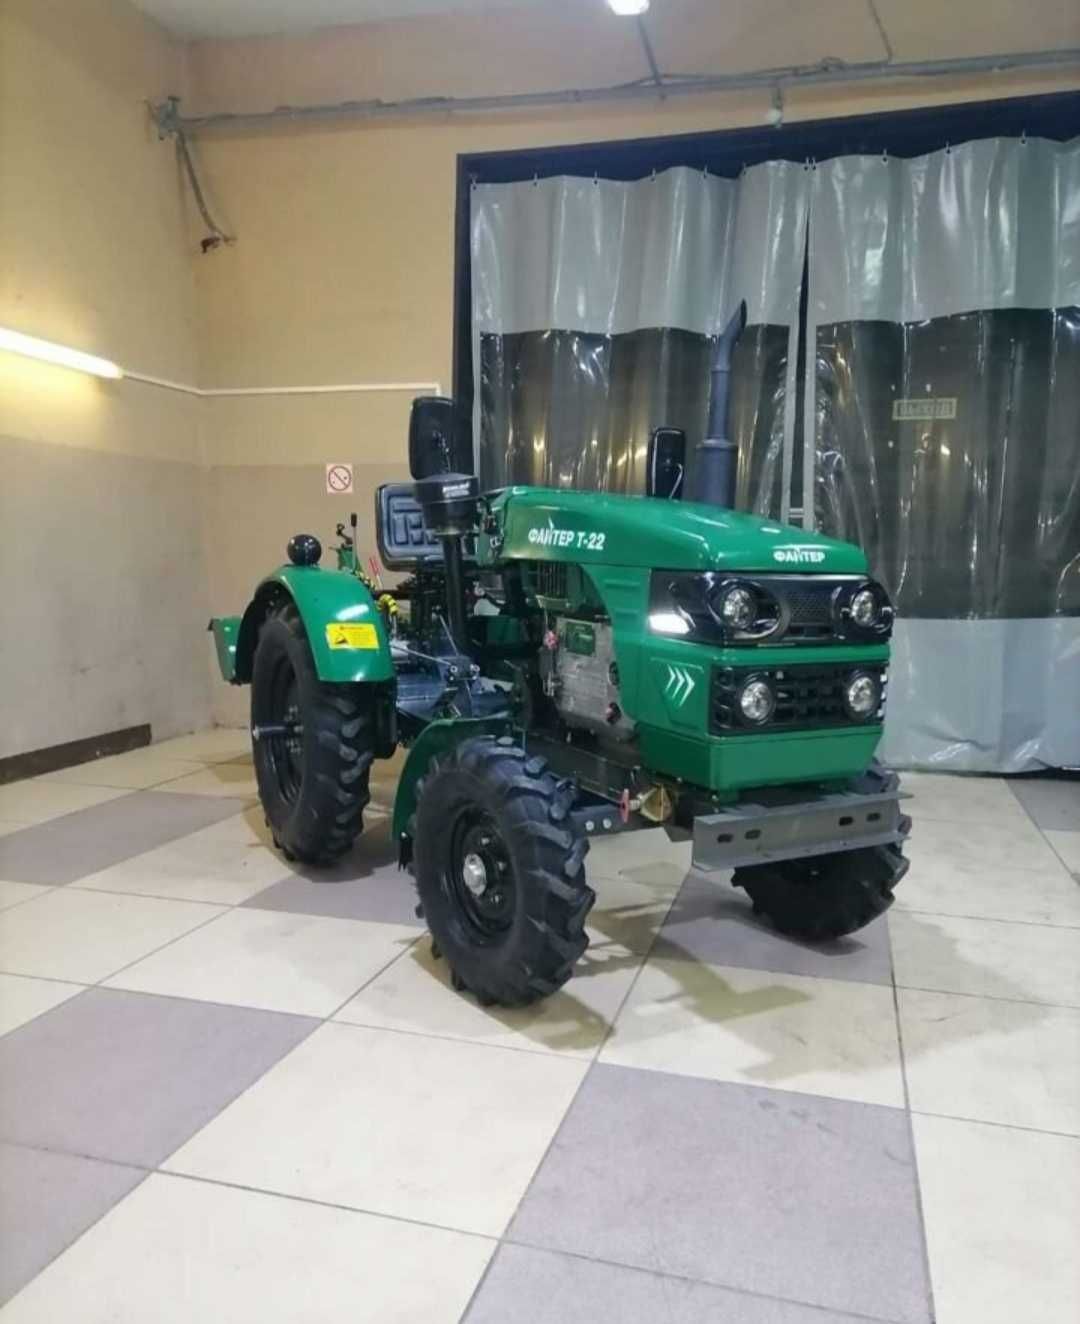 Міні-трактор Файтер T-22, 2021